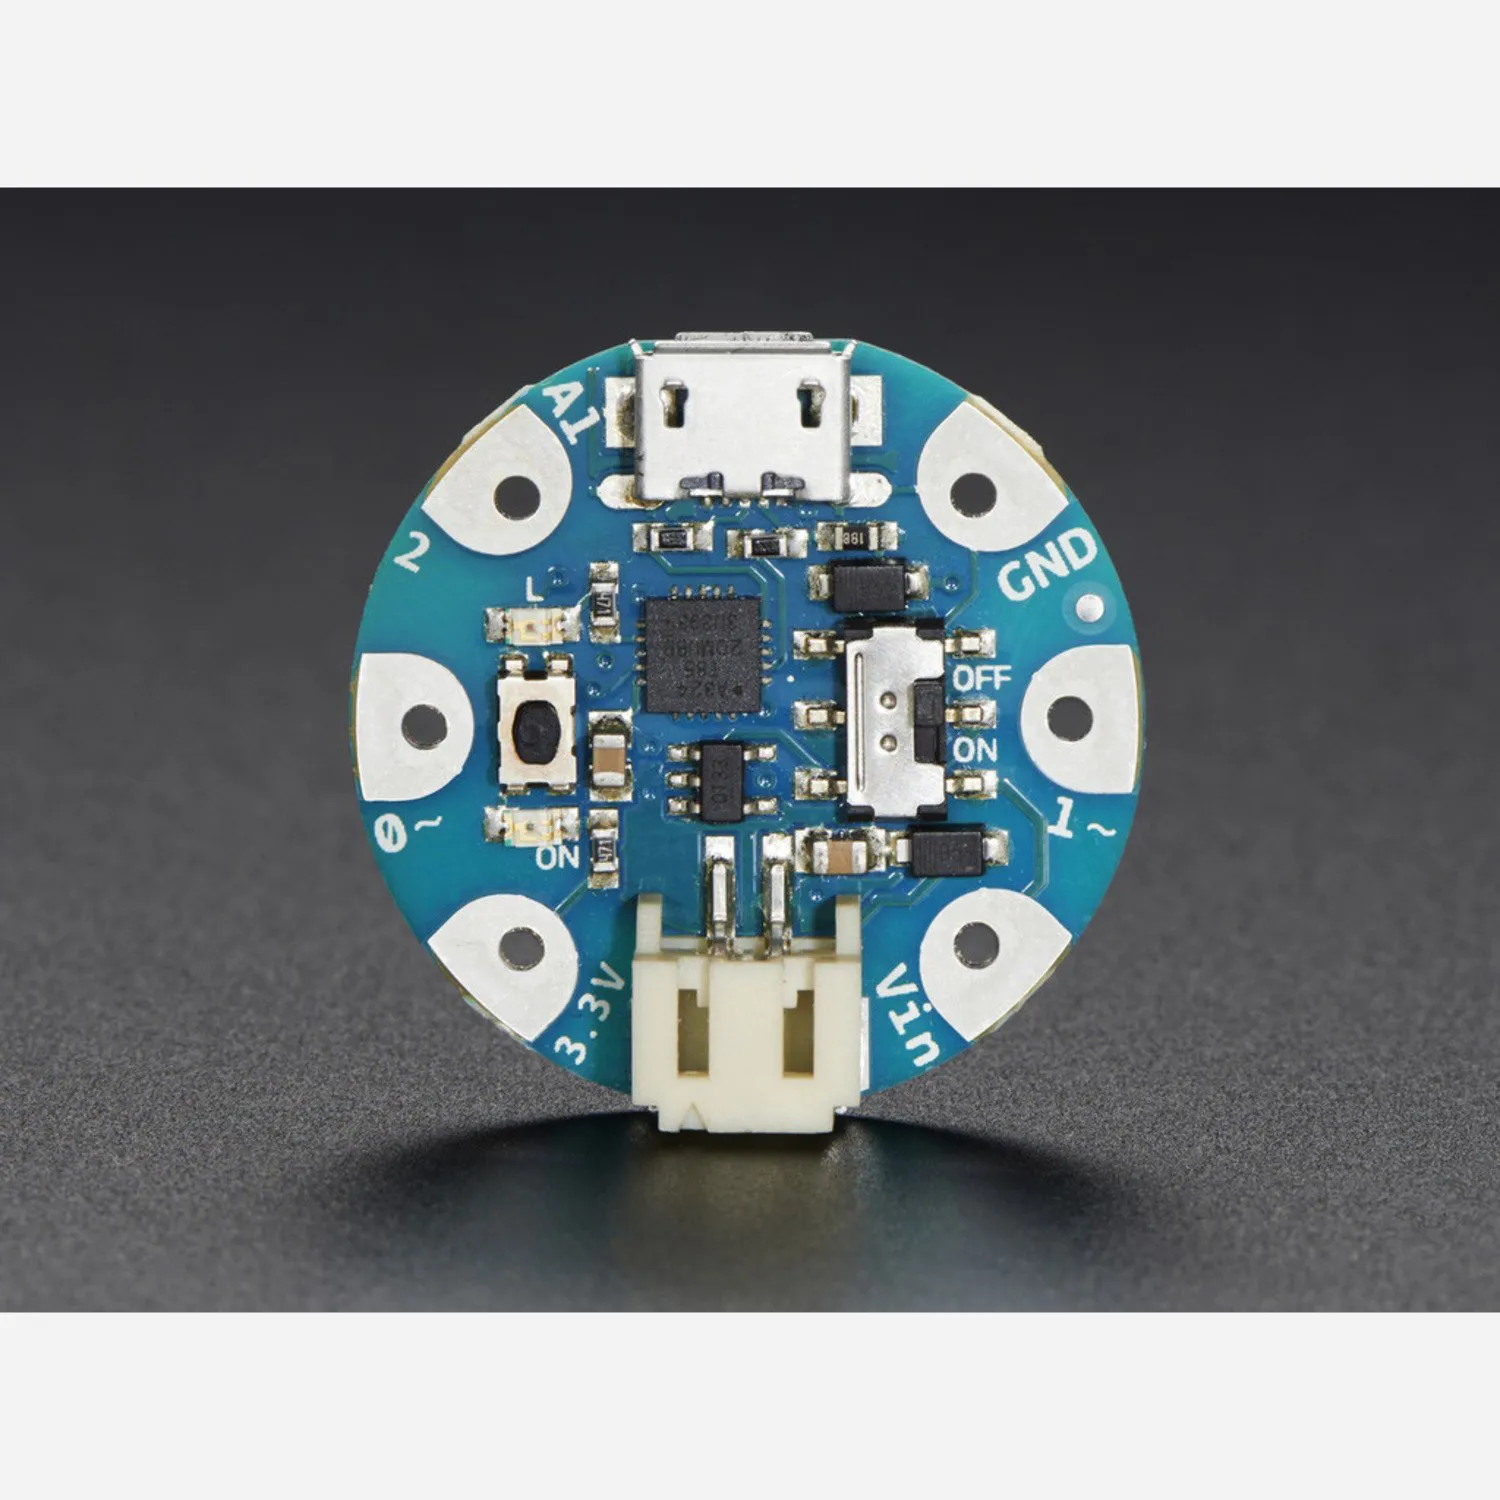 Photo of Arduino GEMMA - Miniature wearable electronic platform